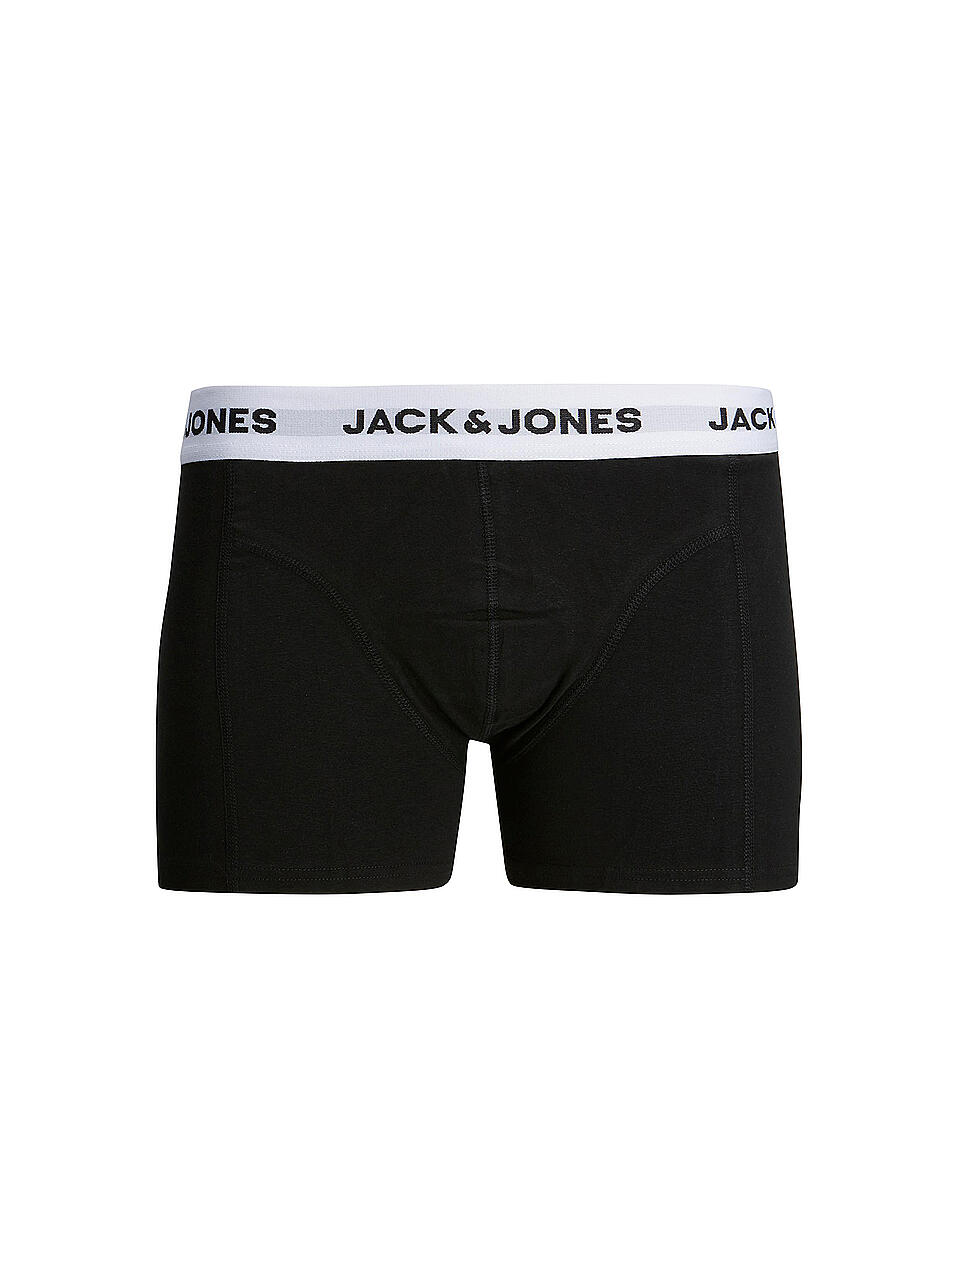 JACK & JONES | Jungen Pant 5-er Pkg JACBASIC black | schwarz